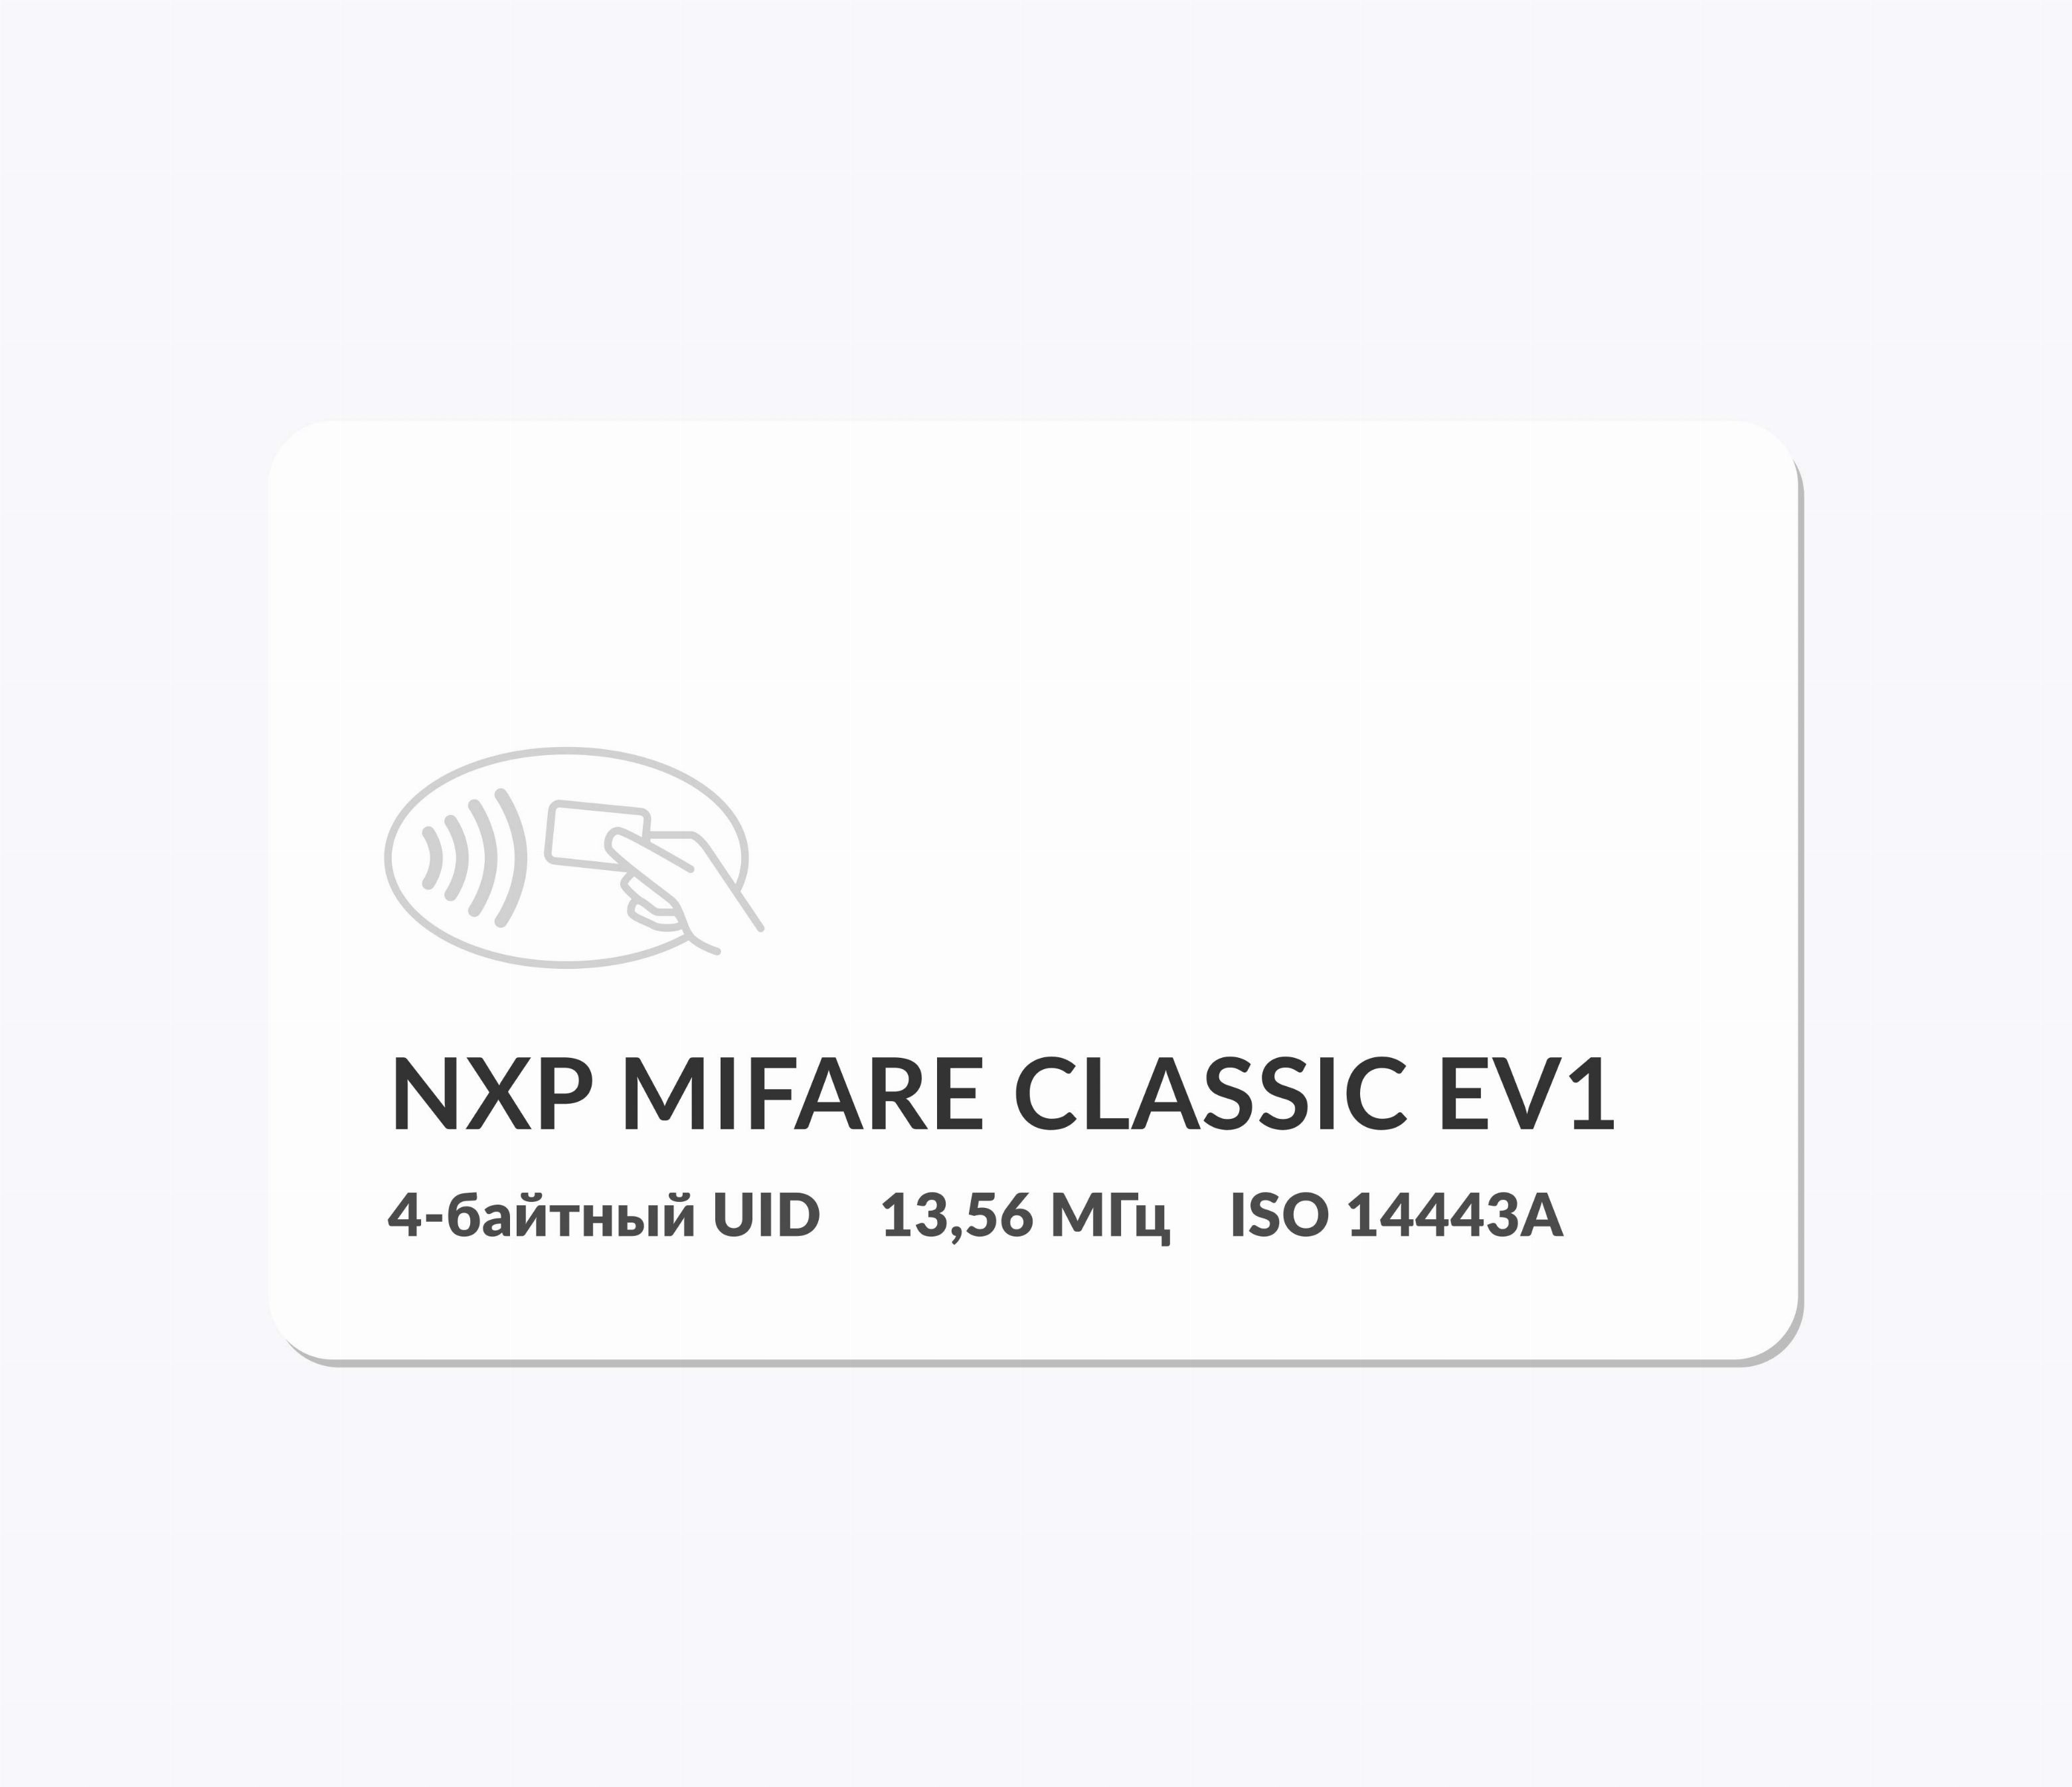 RFID-карты с чипом NXP MIFARE Classic EV1 1k 7 byte nUID RFID-карты с чипом NXP MIFARE Classic EV1 1k 7 byte nUID